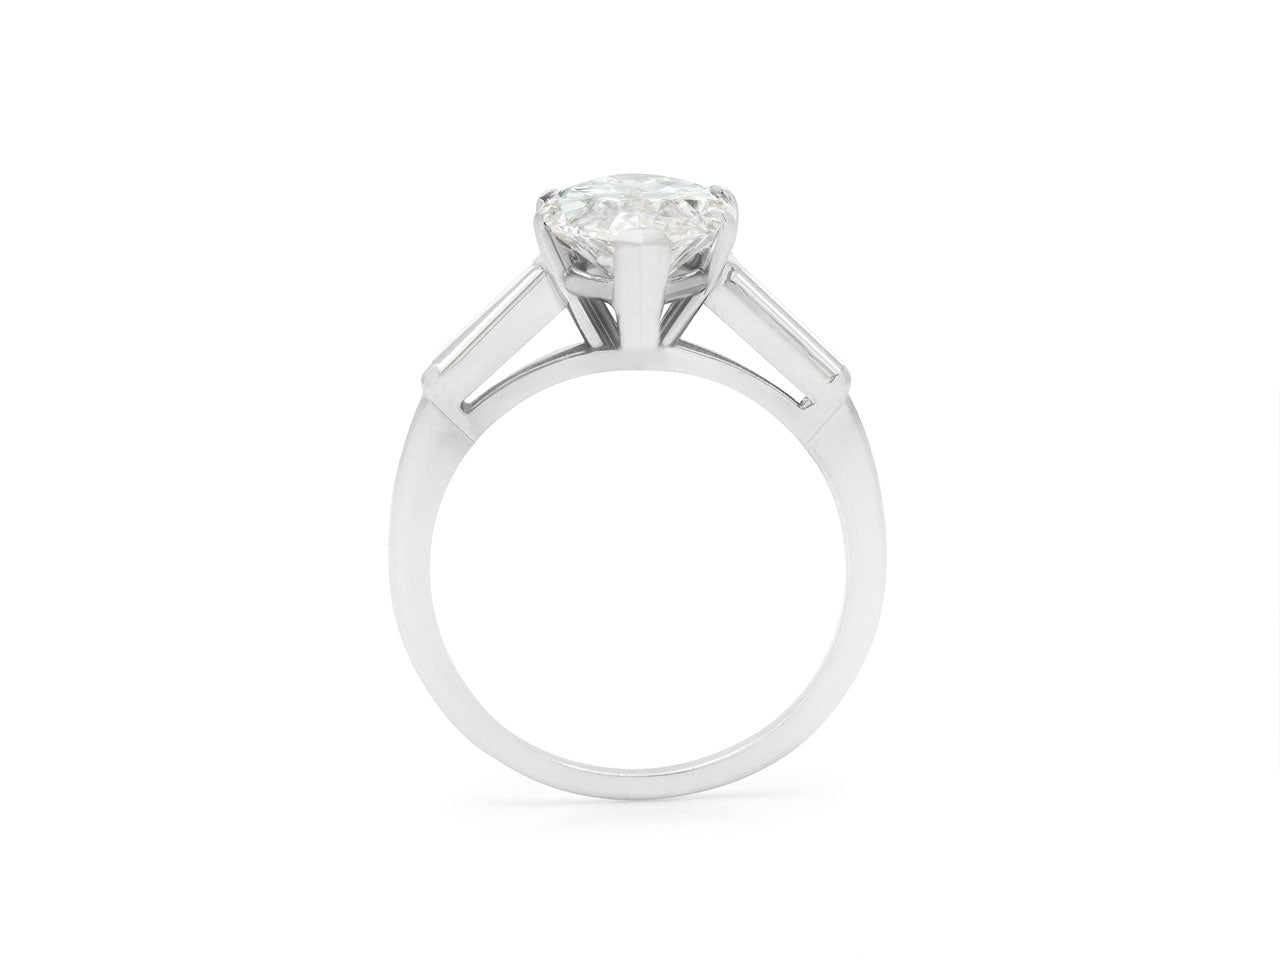 Marquise Diamond Ring, 3.06 Carats I/VVS2, in Platinum